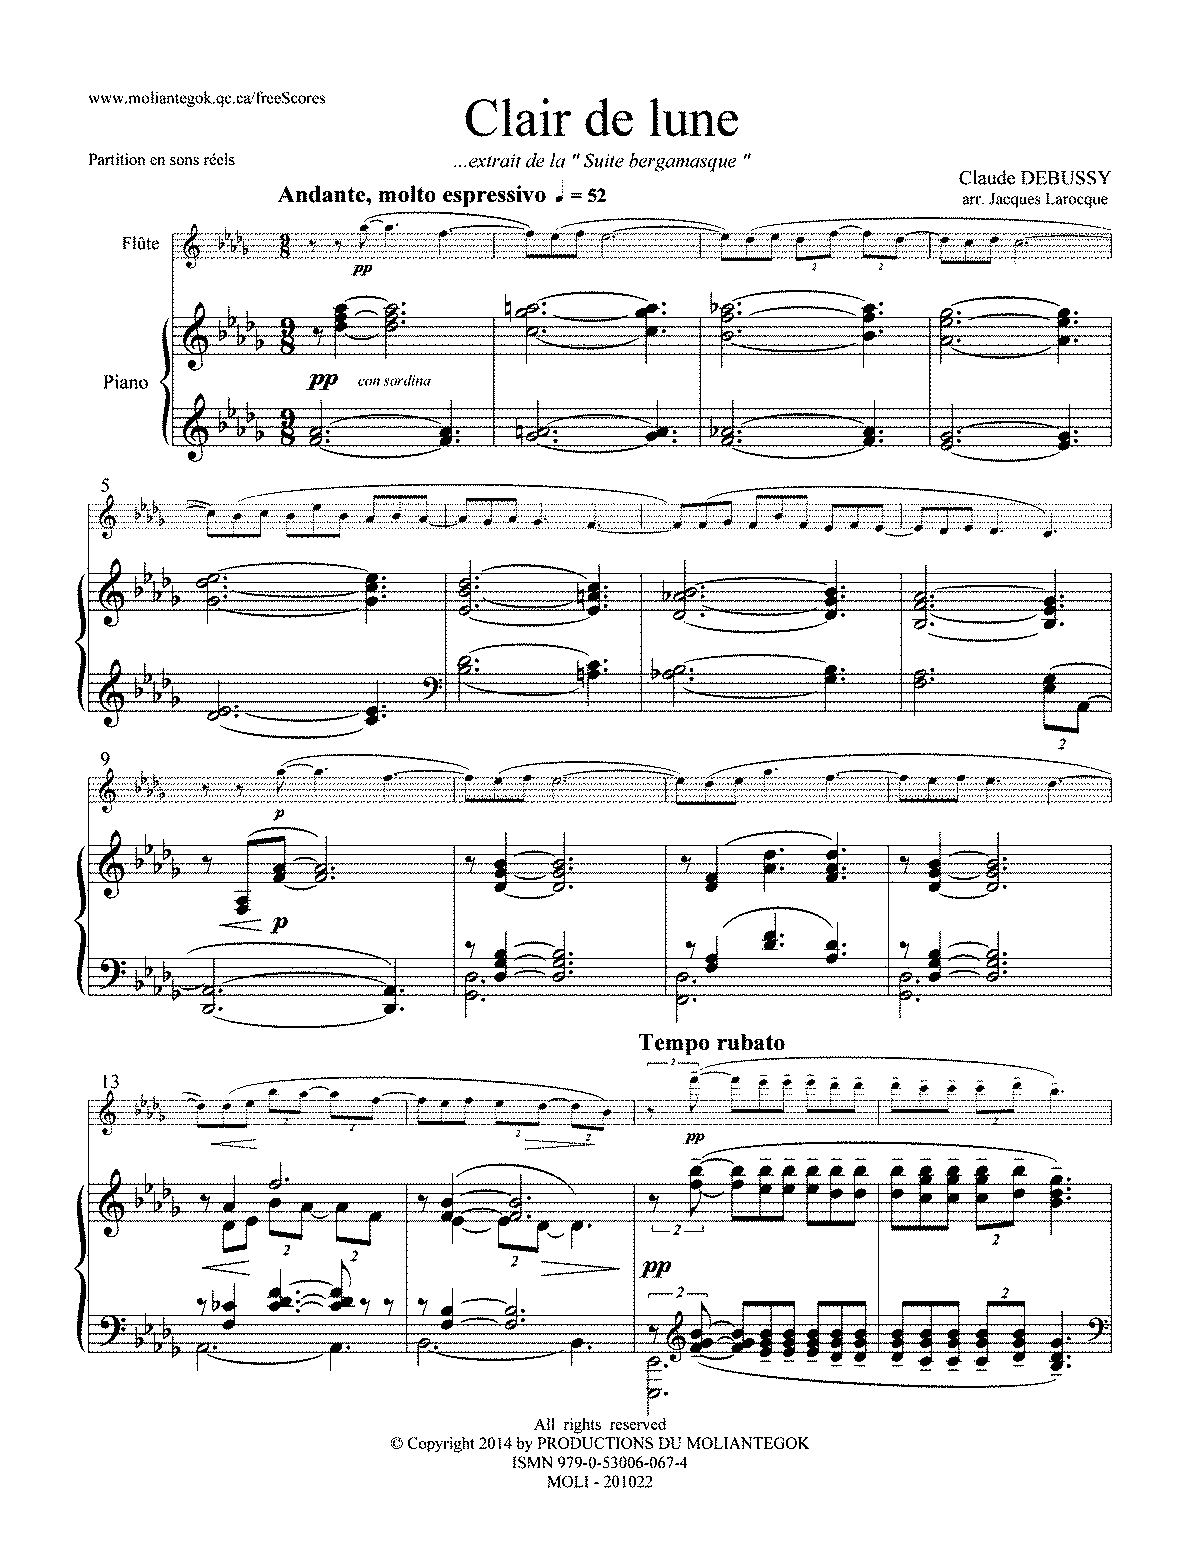 Padre puerta Paralizar File:PMLP02397-DEBUSSY-Clair de lune=flt-pno - Piano score.pdf - IMSLP:  Free Sheet Music PDF Download